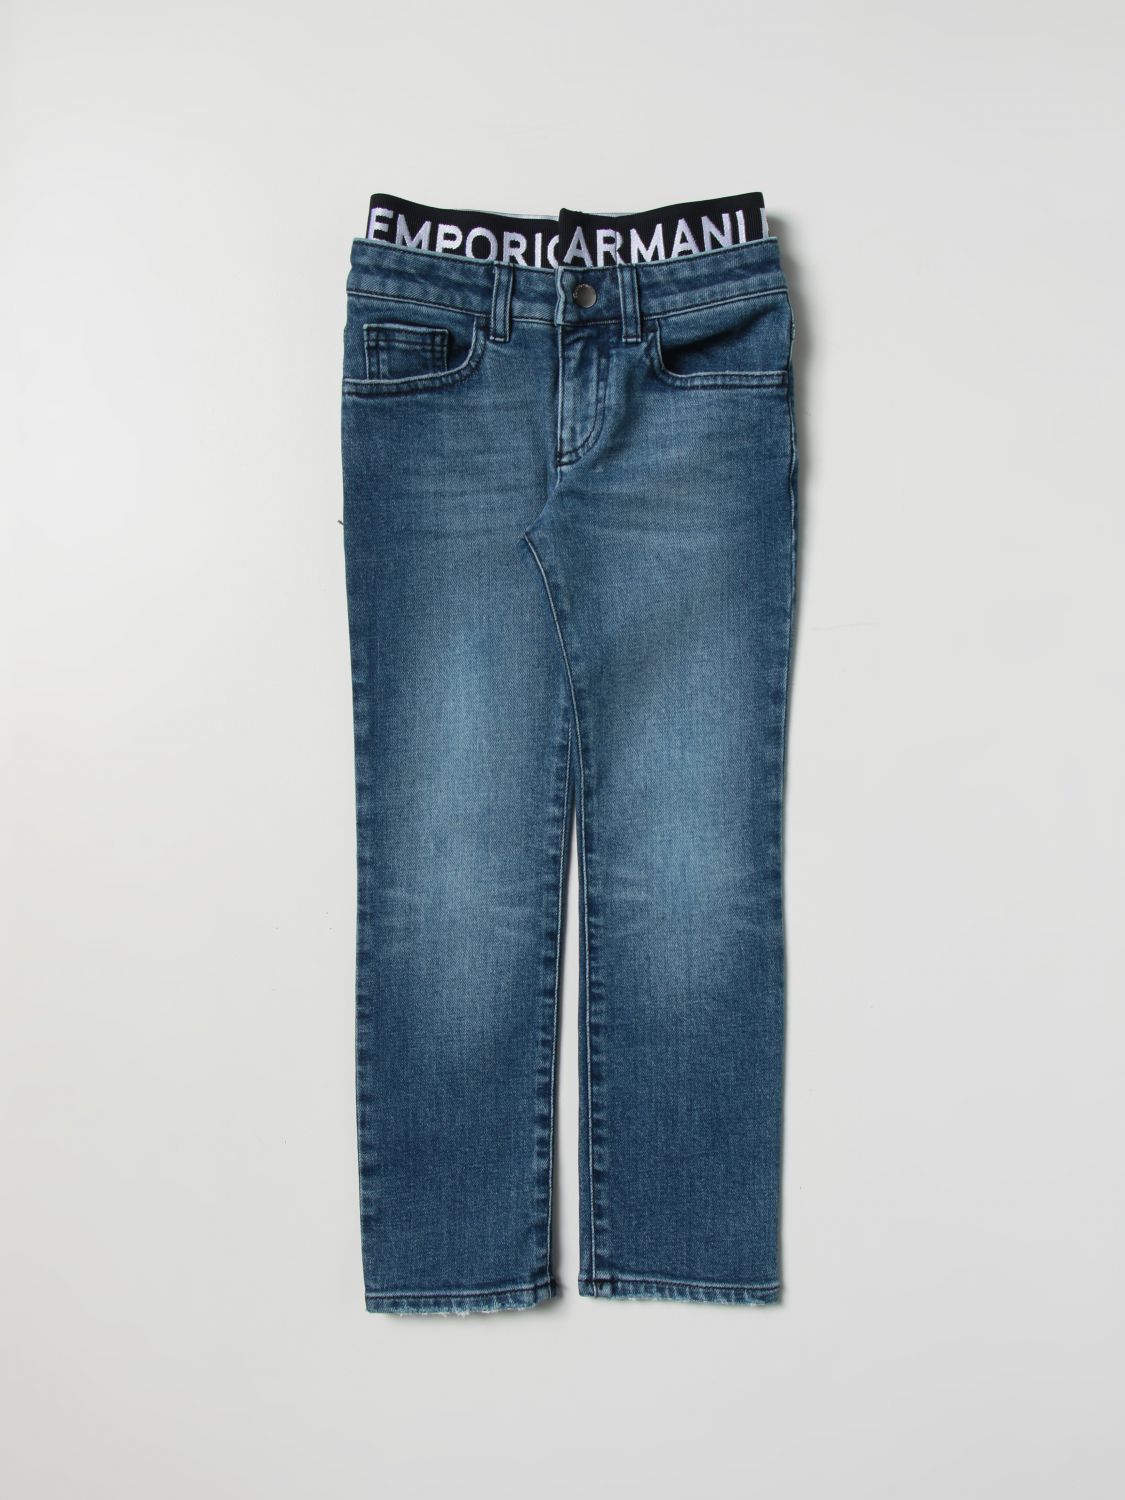 EMPORIO ARMANI KIDS: jeans for boys Denim | Emporio Armani Kids jeans 3R4J174D3UZ online on GIGLIO.COM